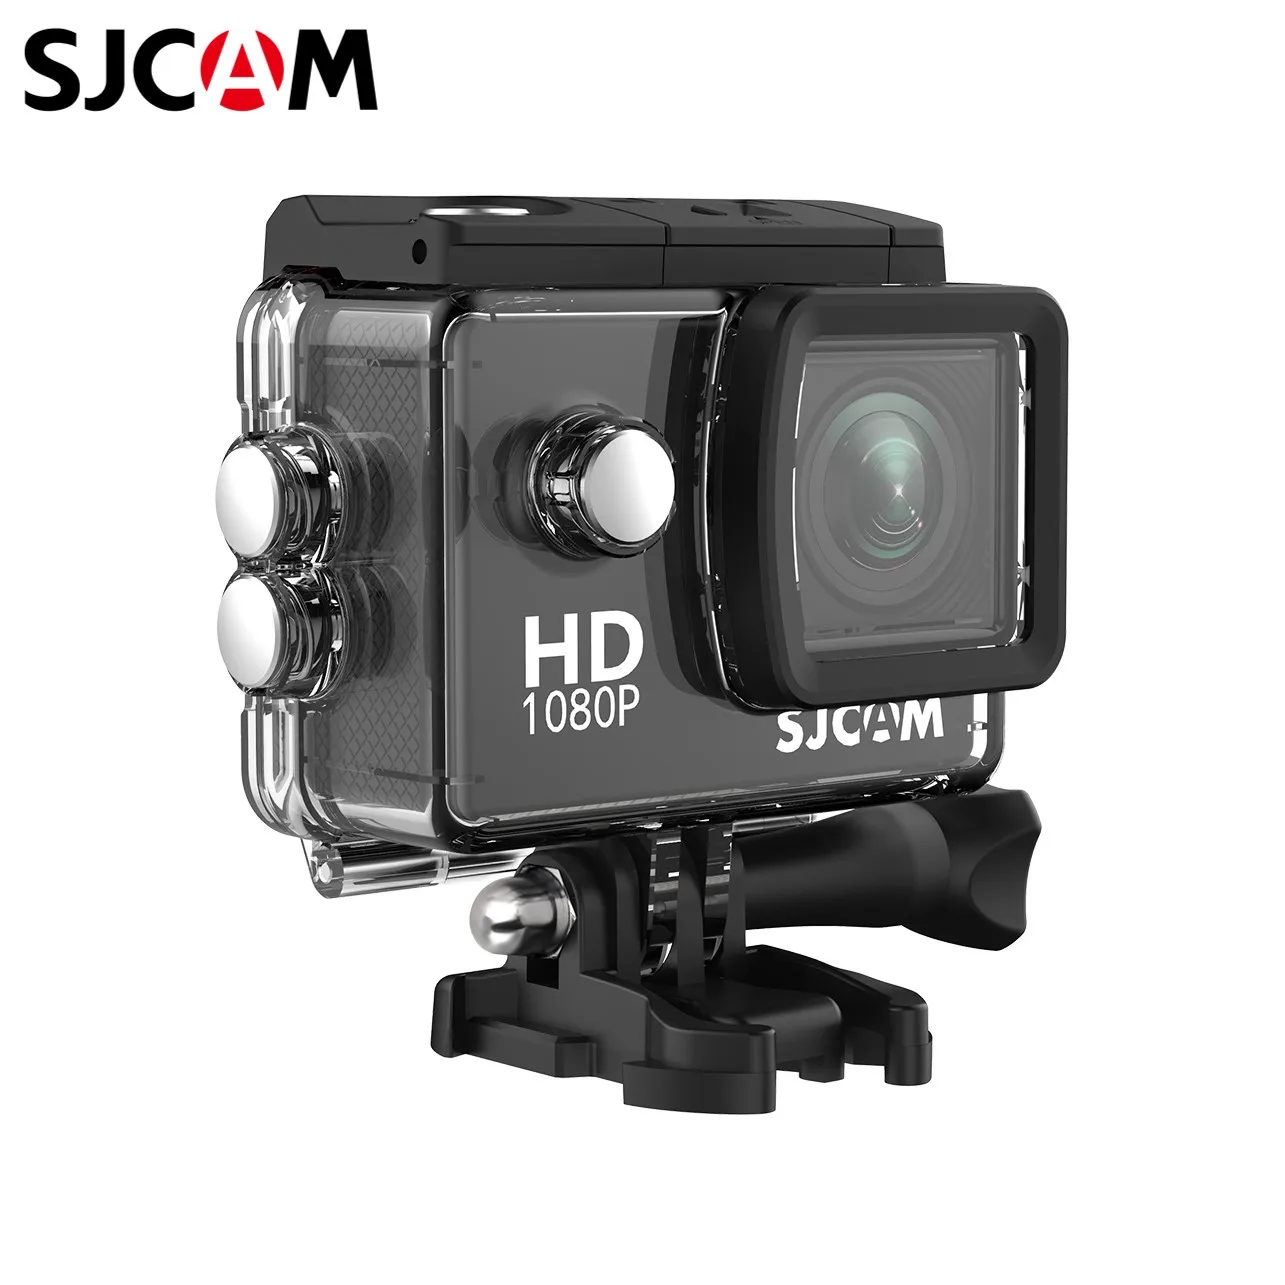 Купить камеру sjcam. SJCAM sj4000 WIFI. Видеокамера SJCAM sj4000. Экшн-камера SJCAM sj4000 WIFI. Камера SJCAM HD 1080p.